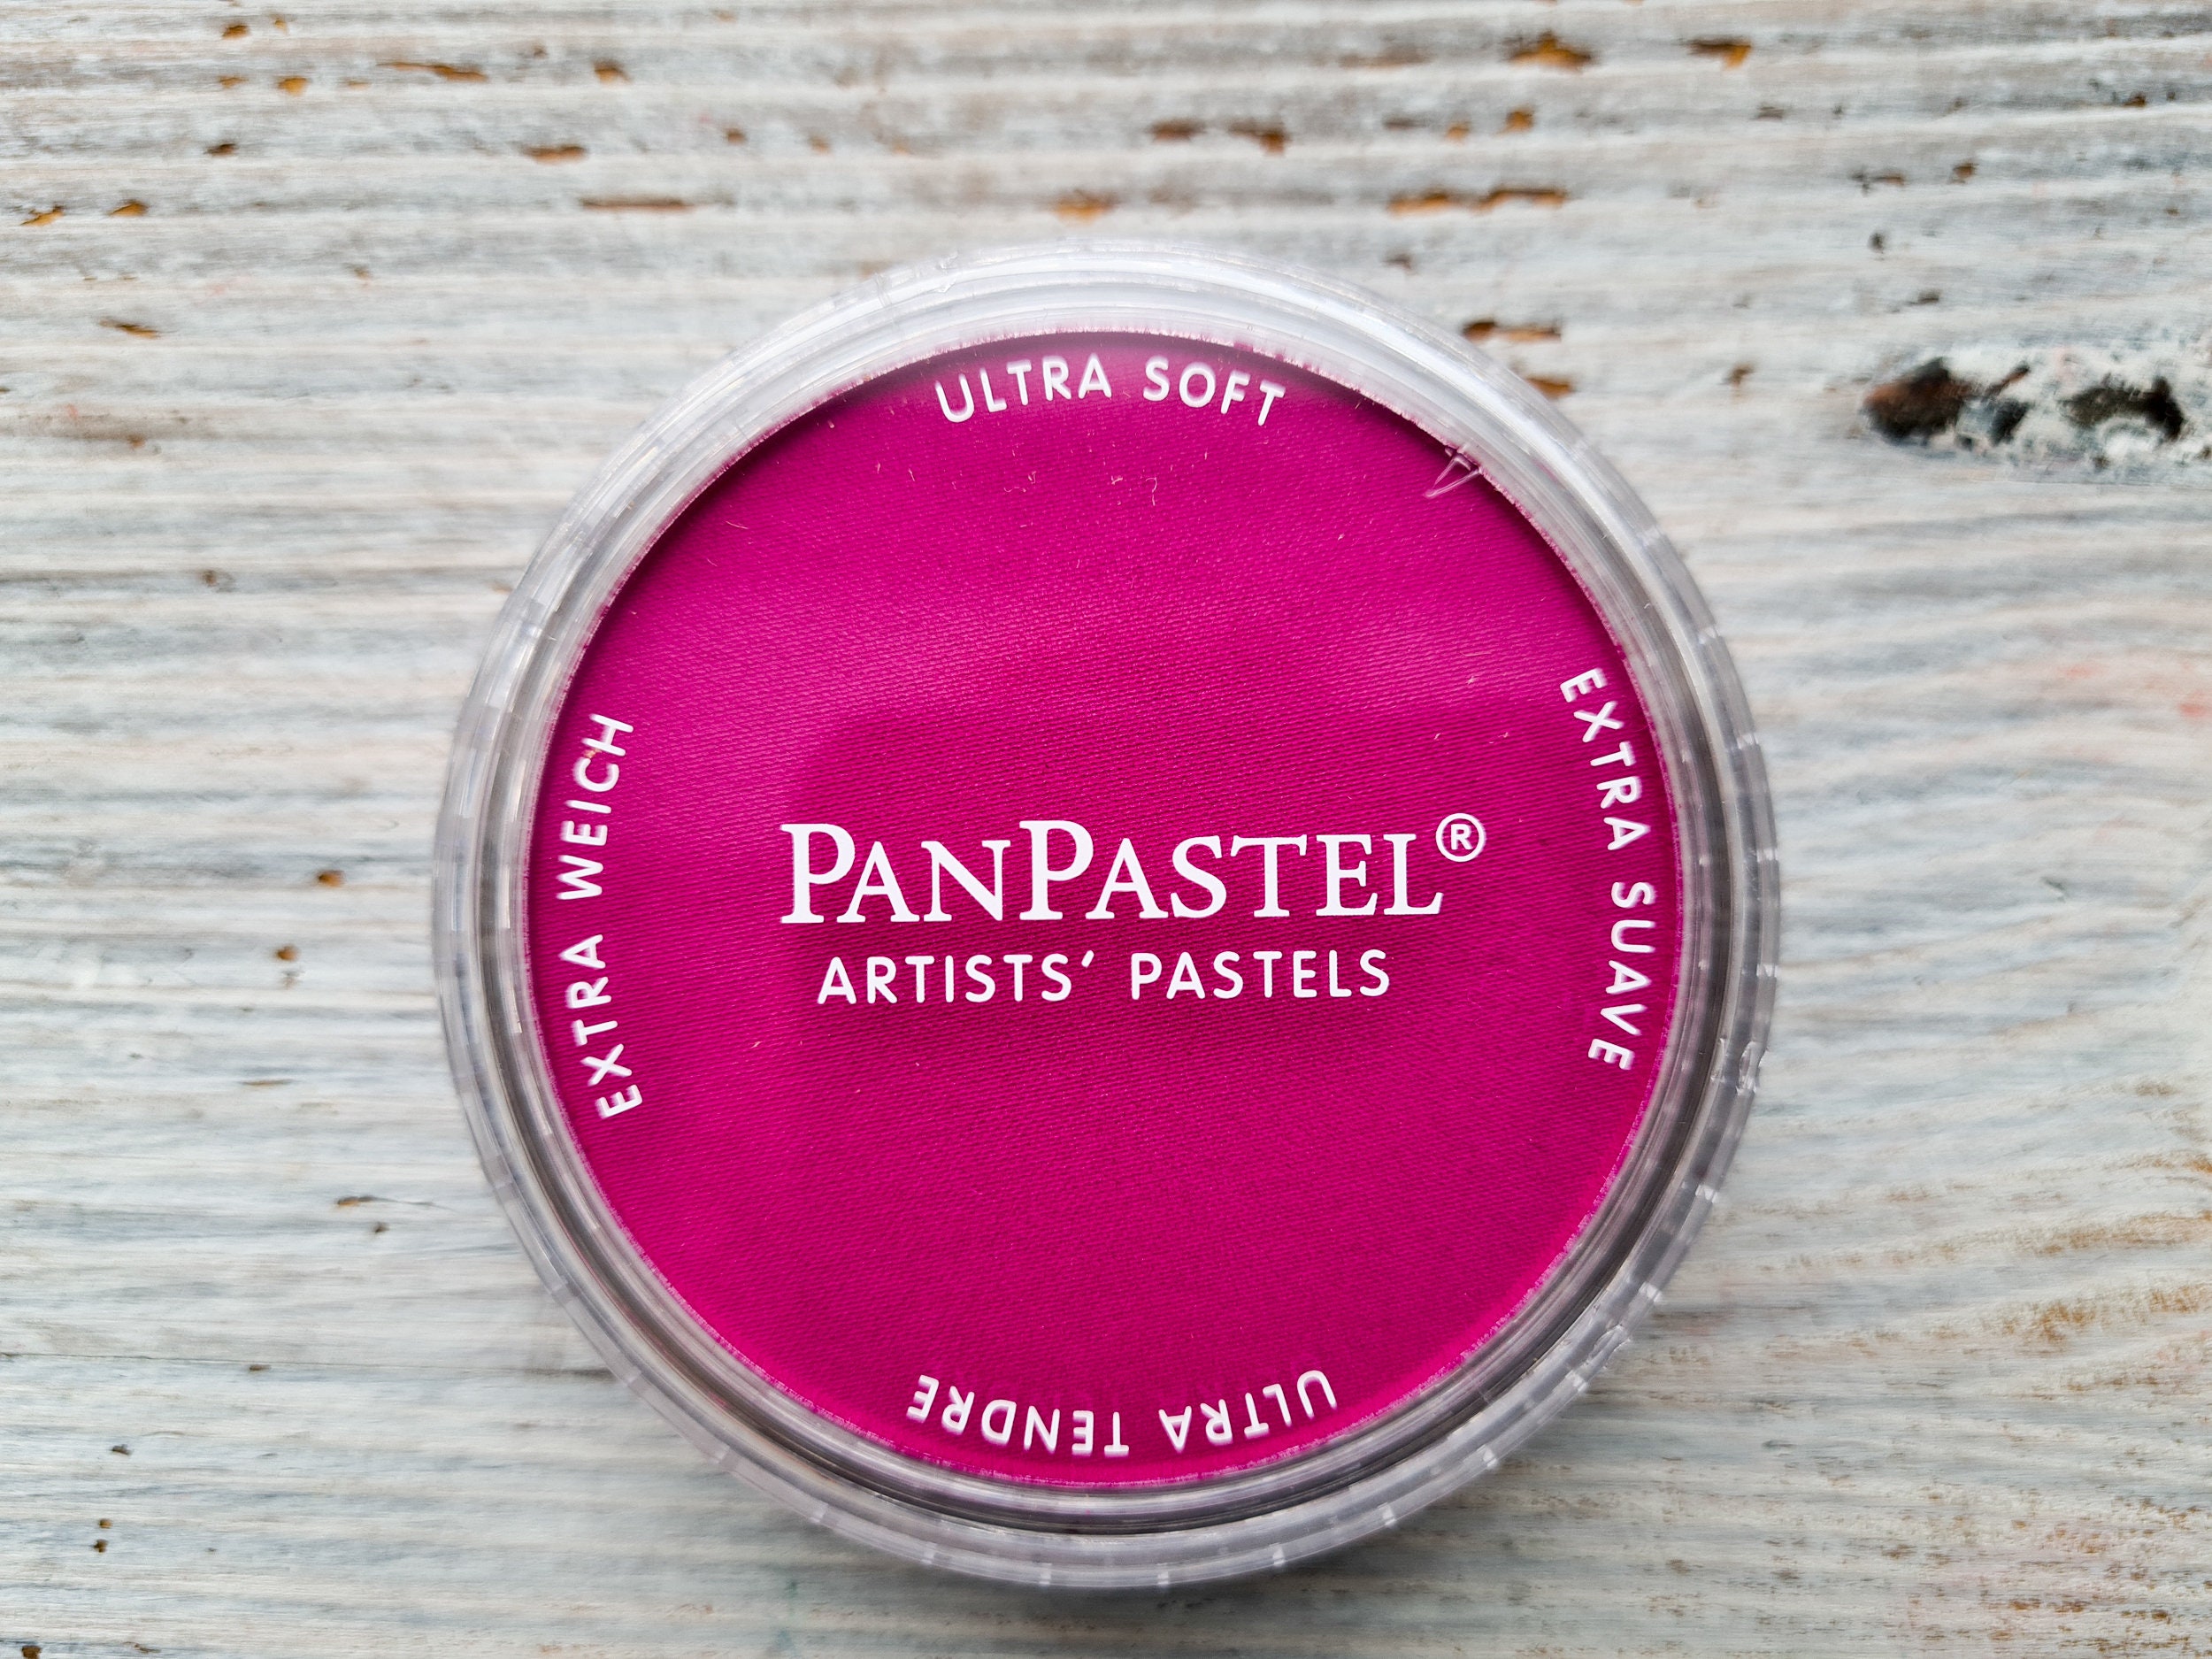 20% OFF - PanPastel - Ultra Soft Artists' Pastels